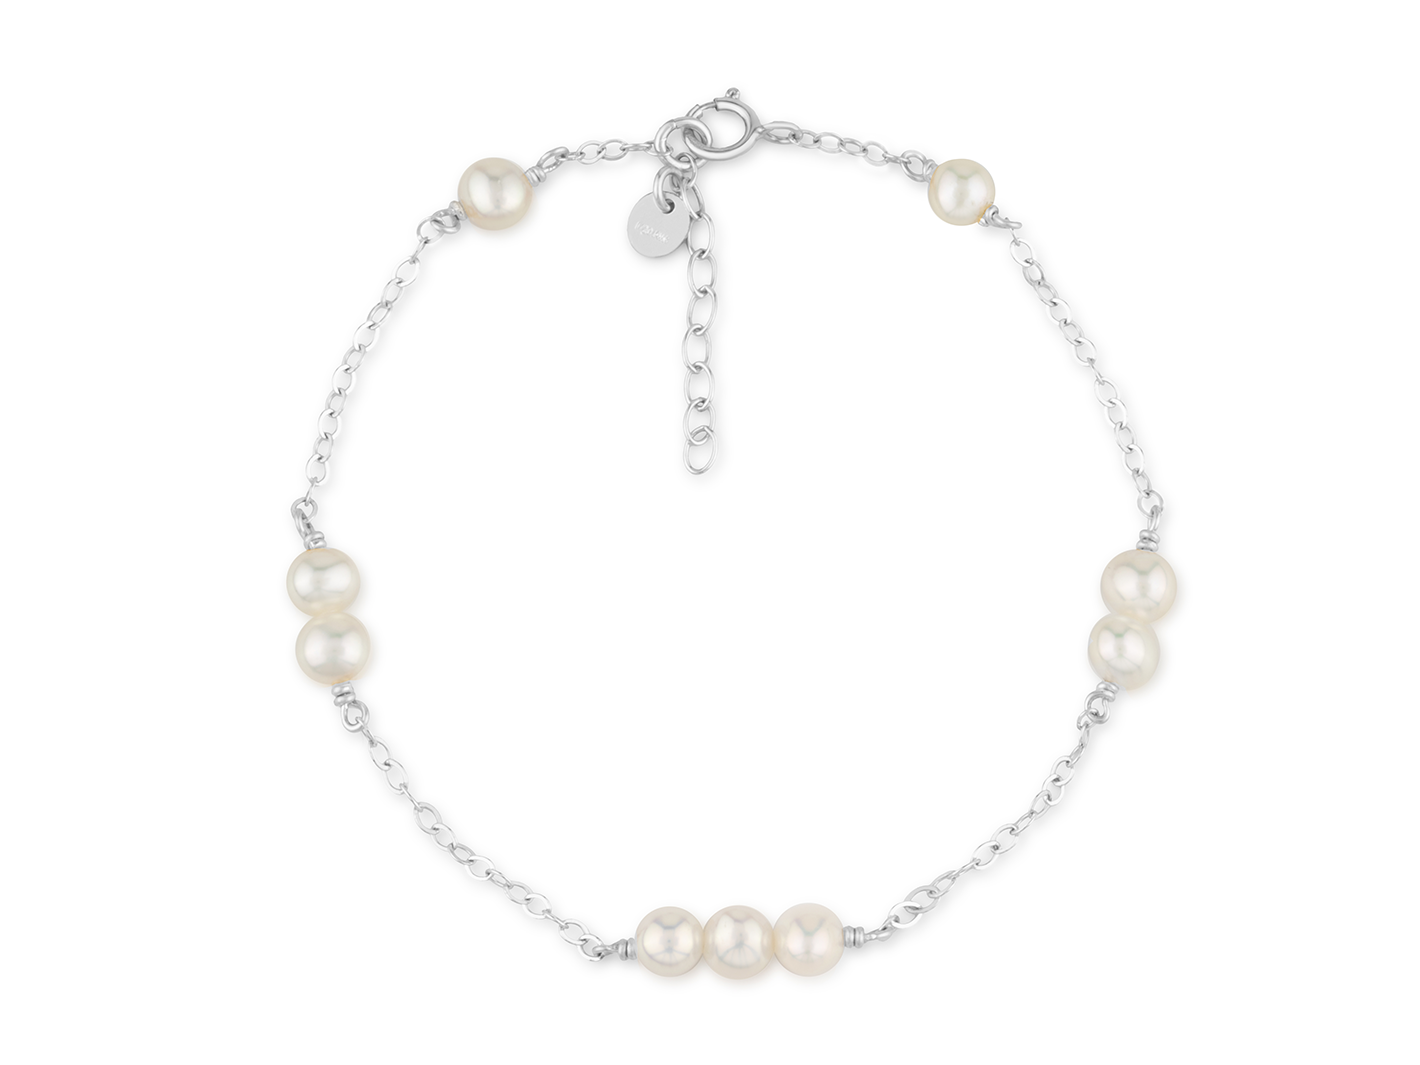 South Sea pearl bracelet - Accessories